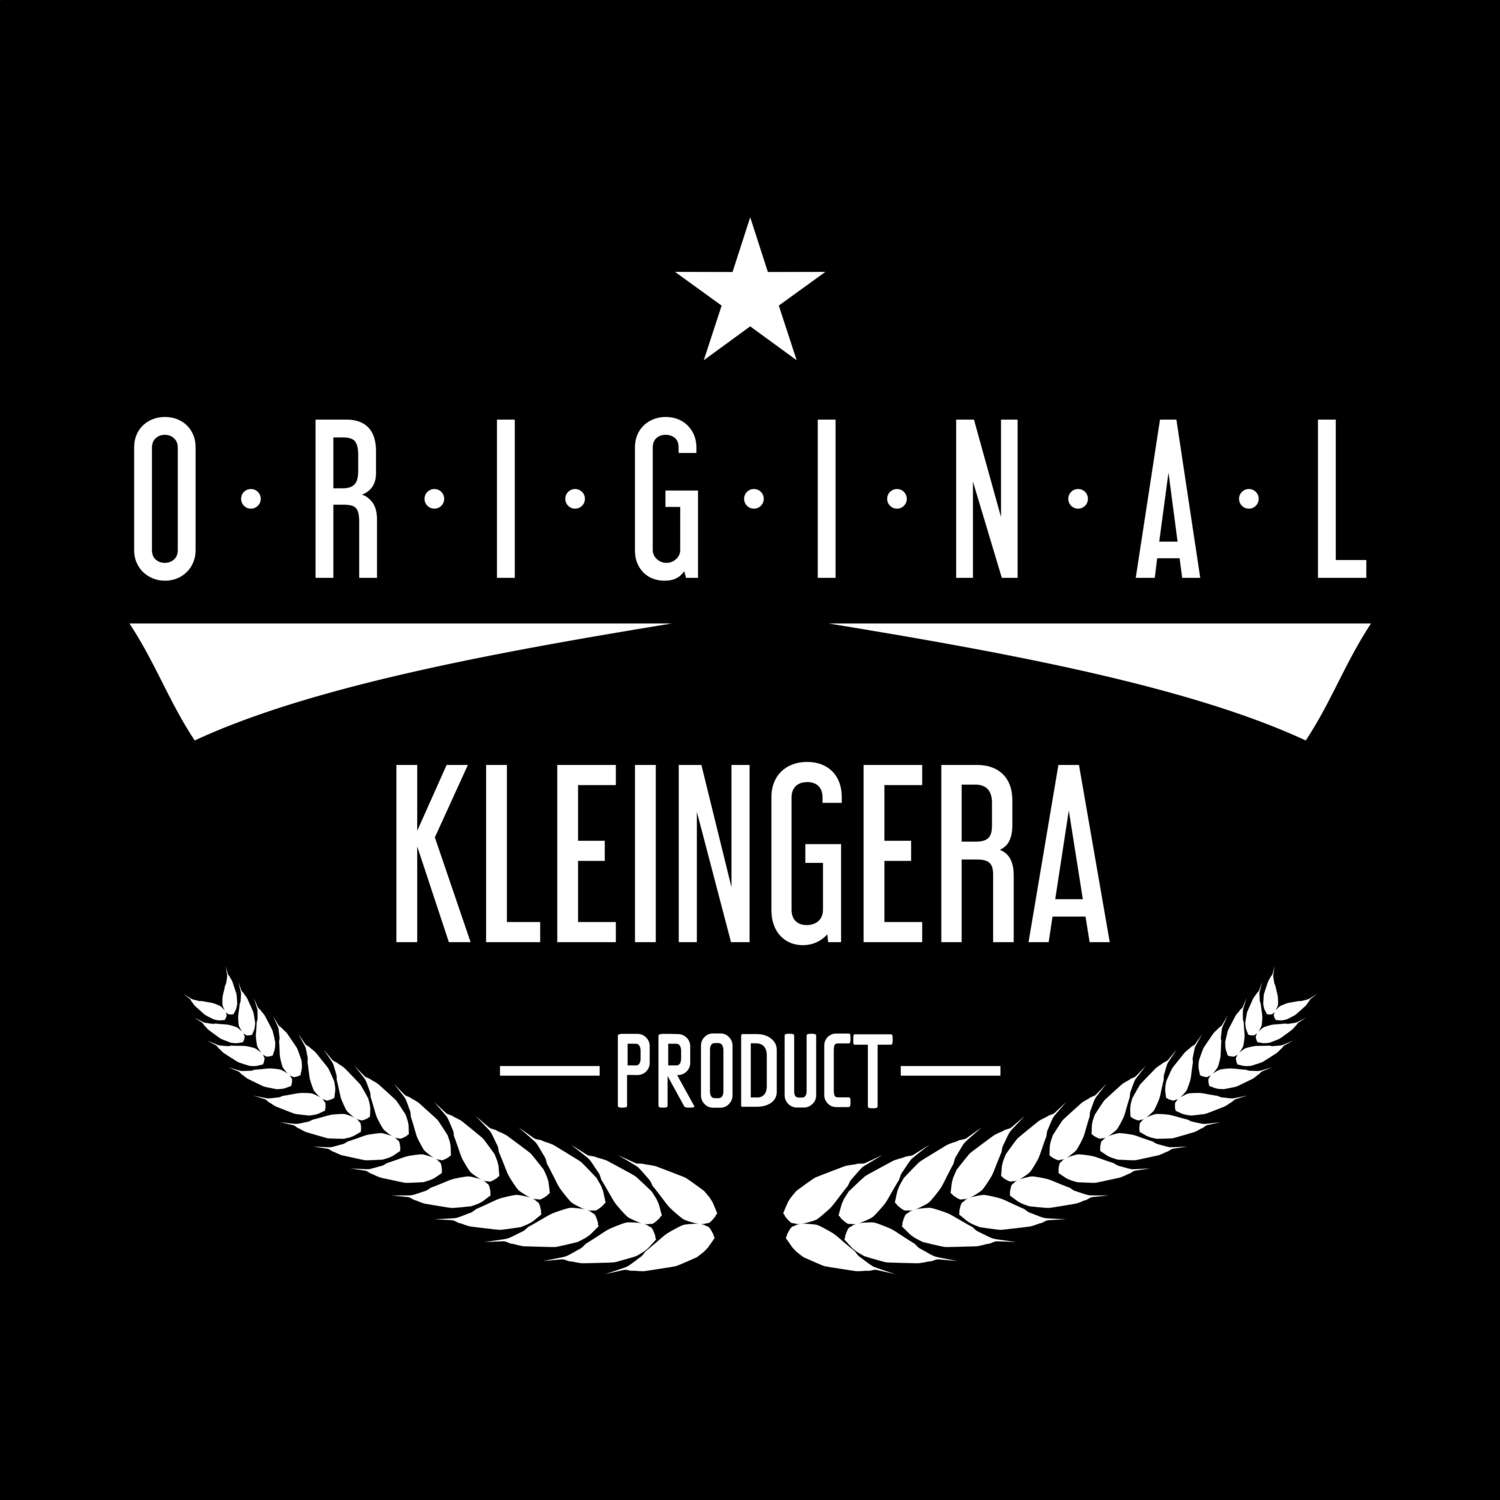 Kleingera T-Shirt »Original Product«